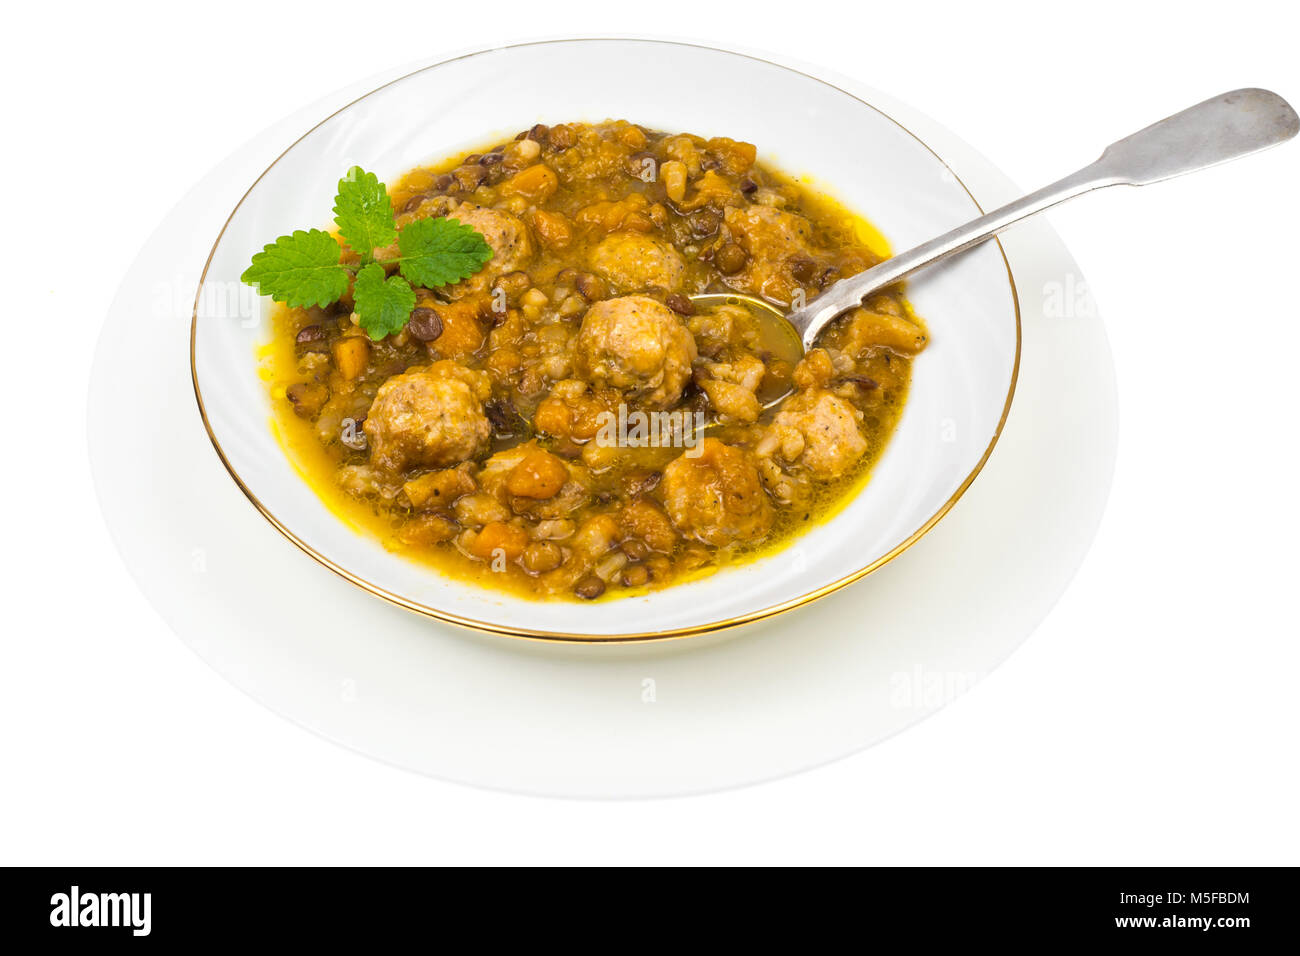 Vegetable lentil soup with meatballs. Studio Photo Stock Photo